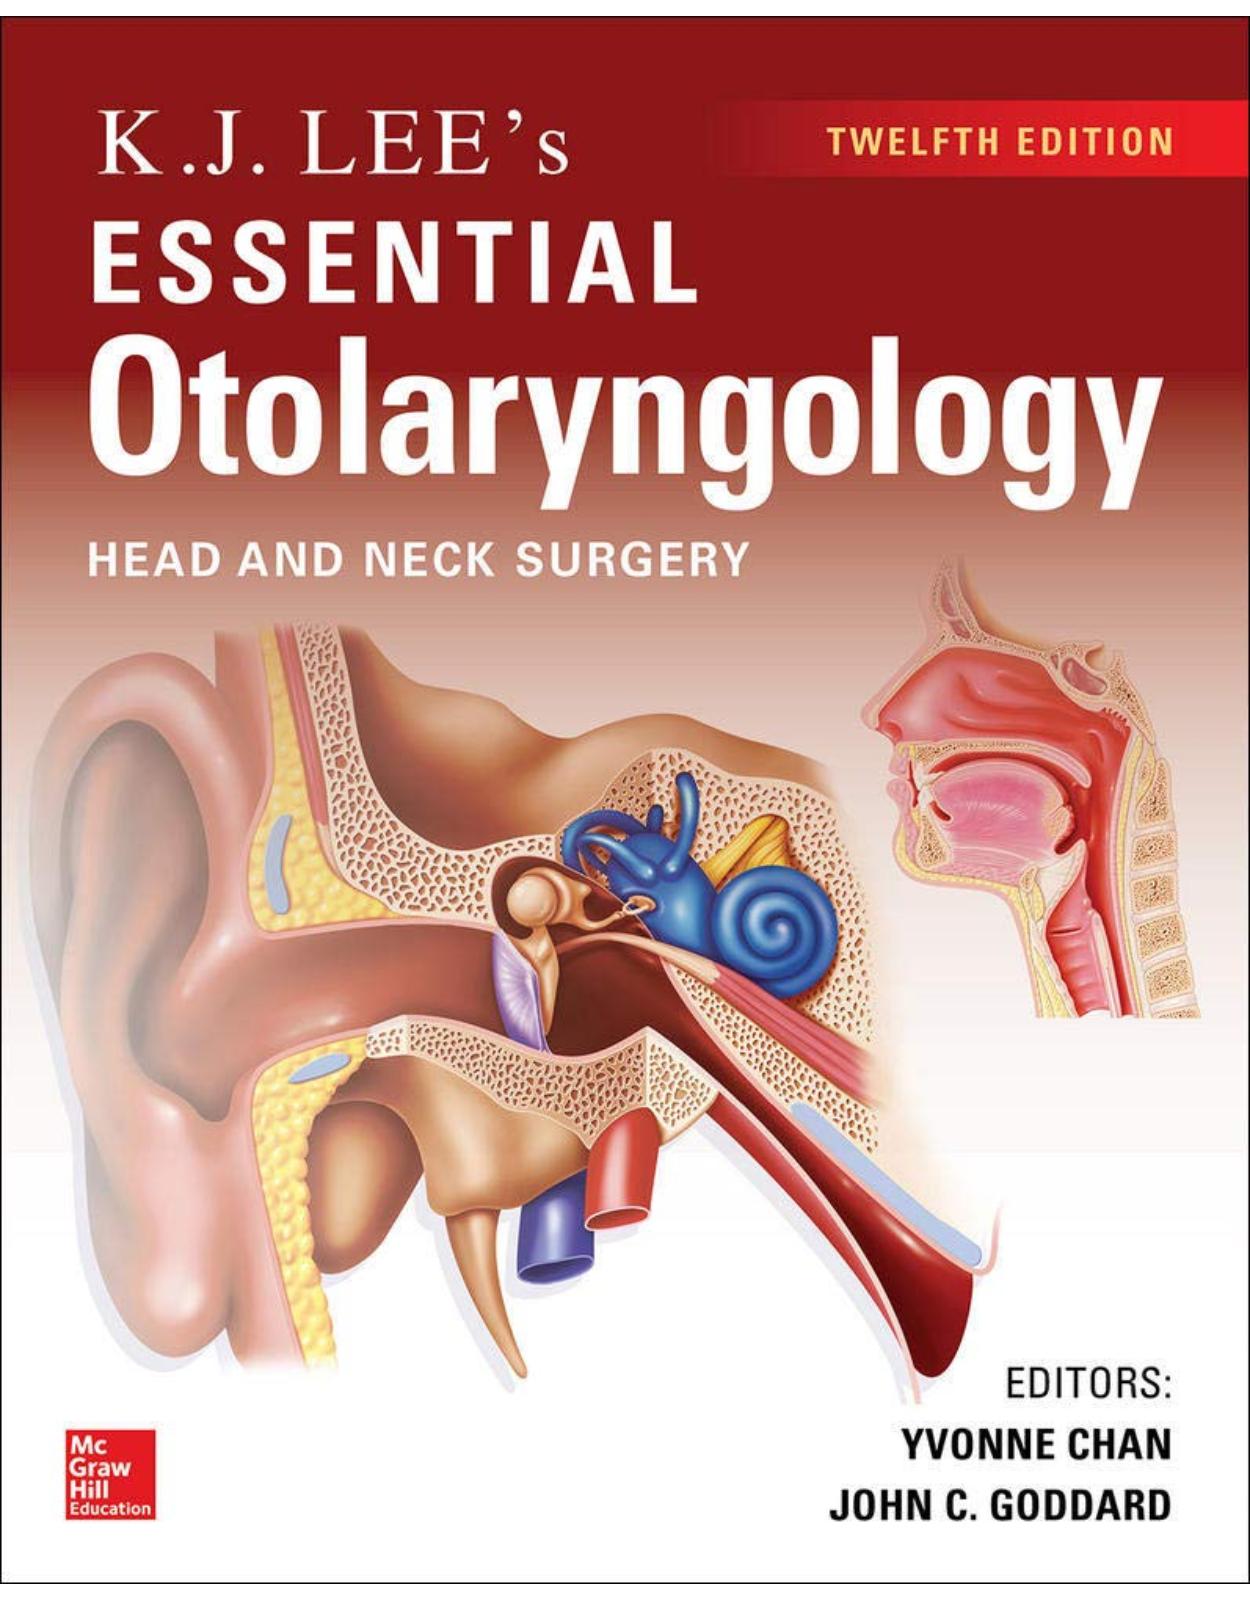 KJ Lee’s Essential Otolaryngology, 12th edition 